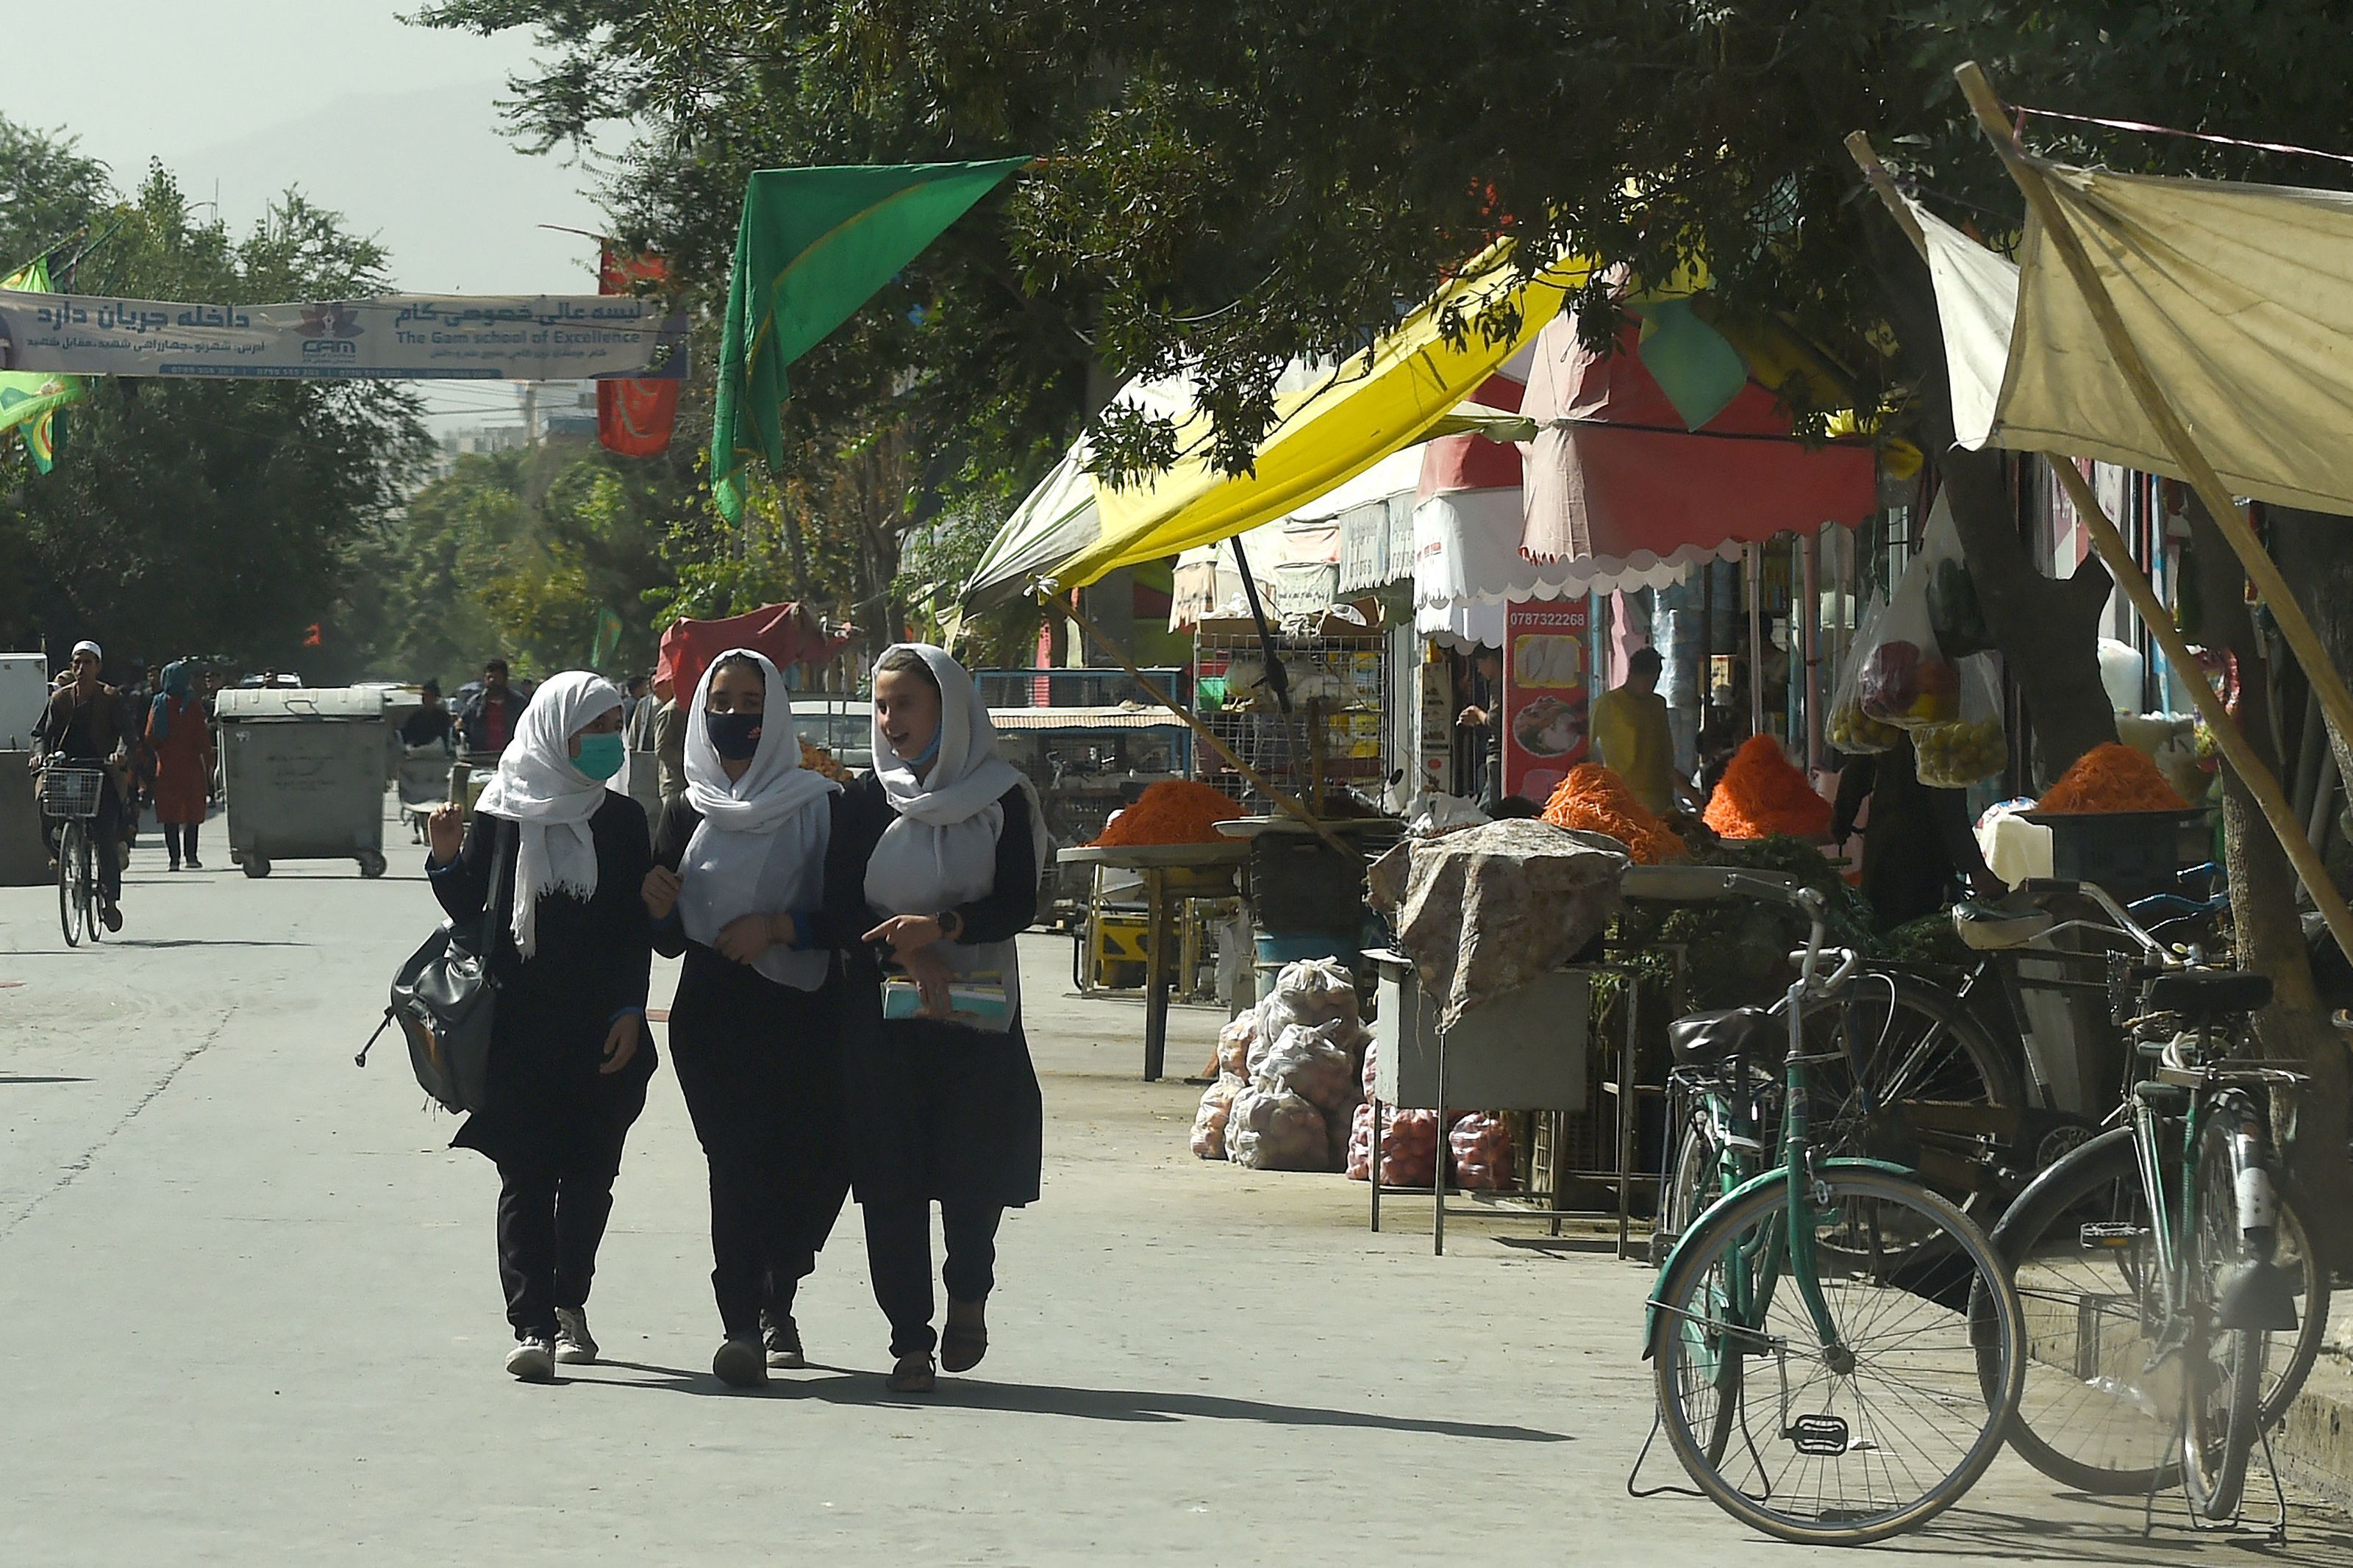 Afghan school girls walk through in a street in Kabul on August 15